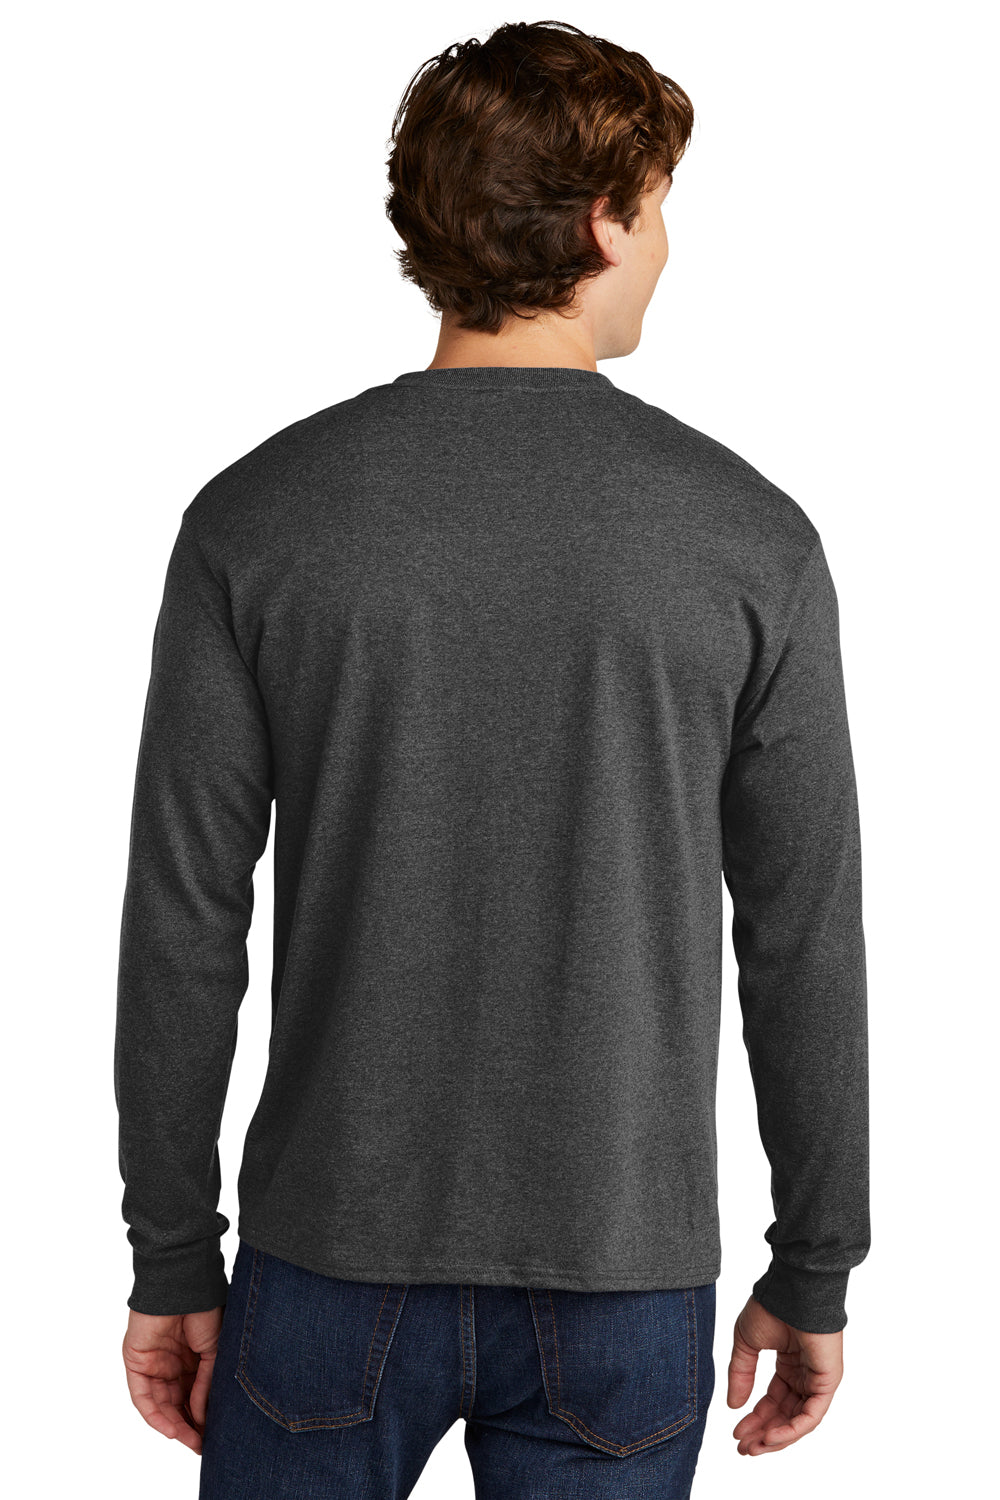 Hanes 5286 Mens ComfortSoft Long Sleeve Crewneck T-Shirt Heather Charcoal Grey Back